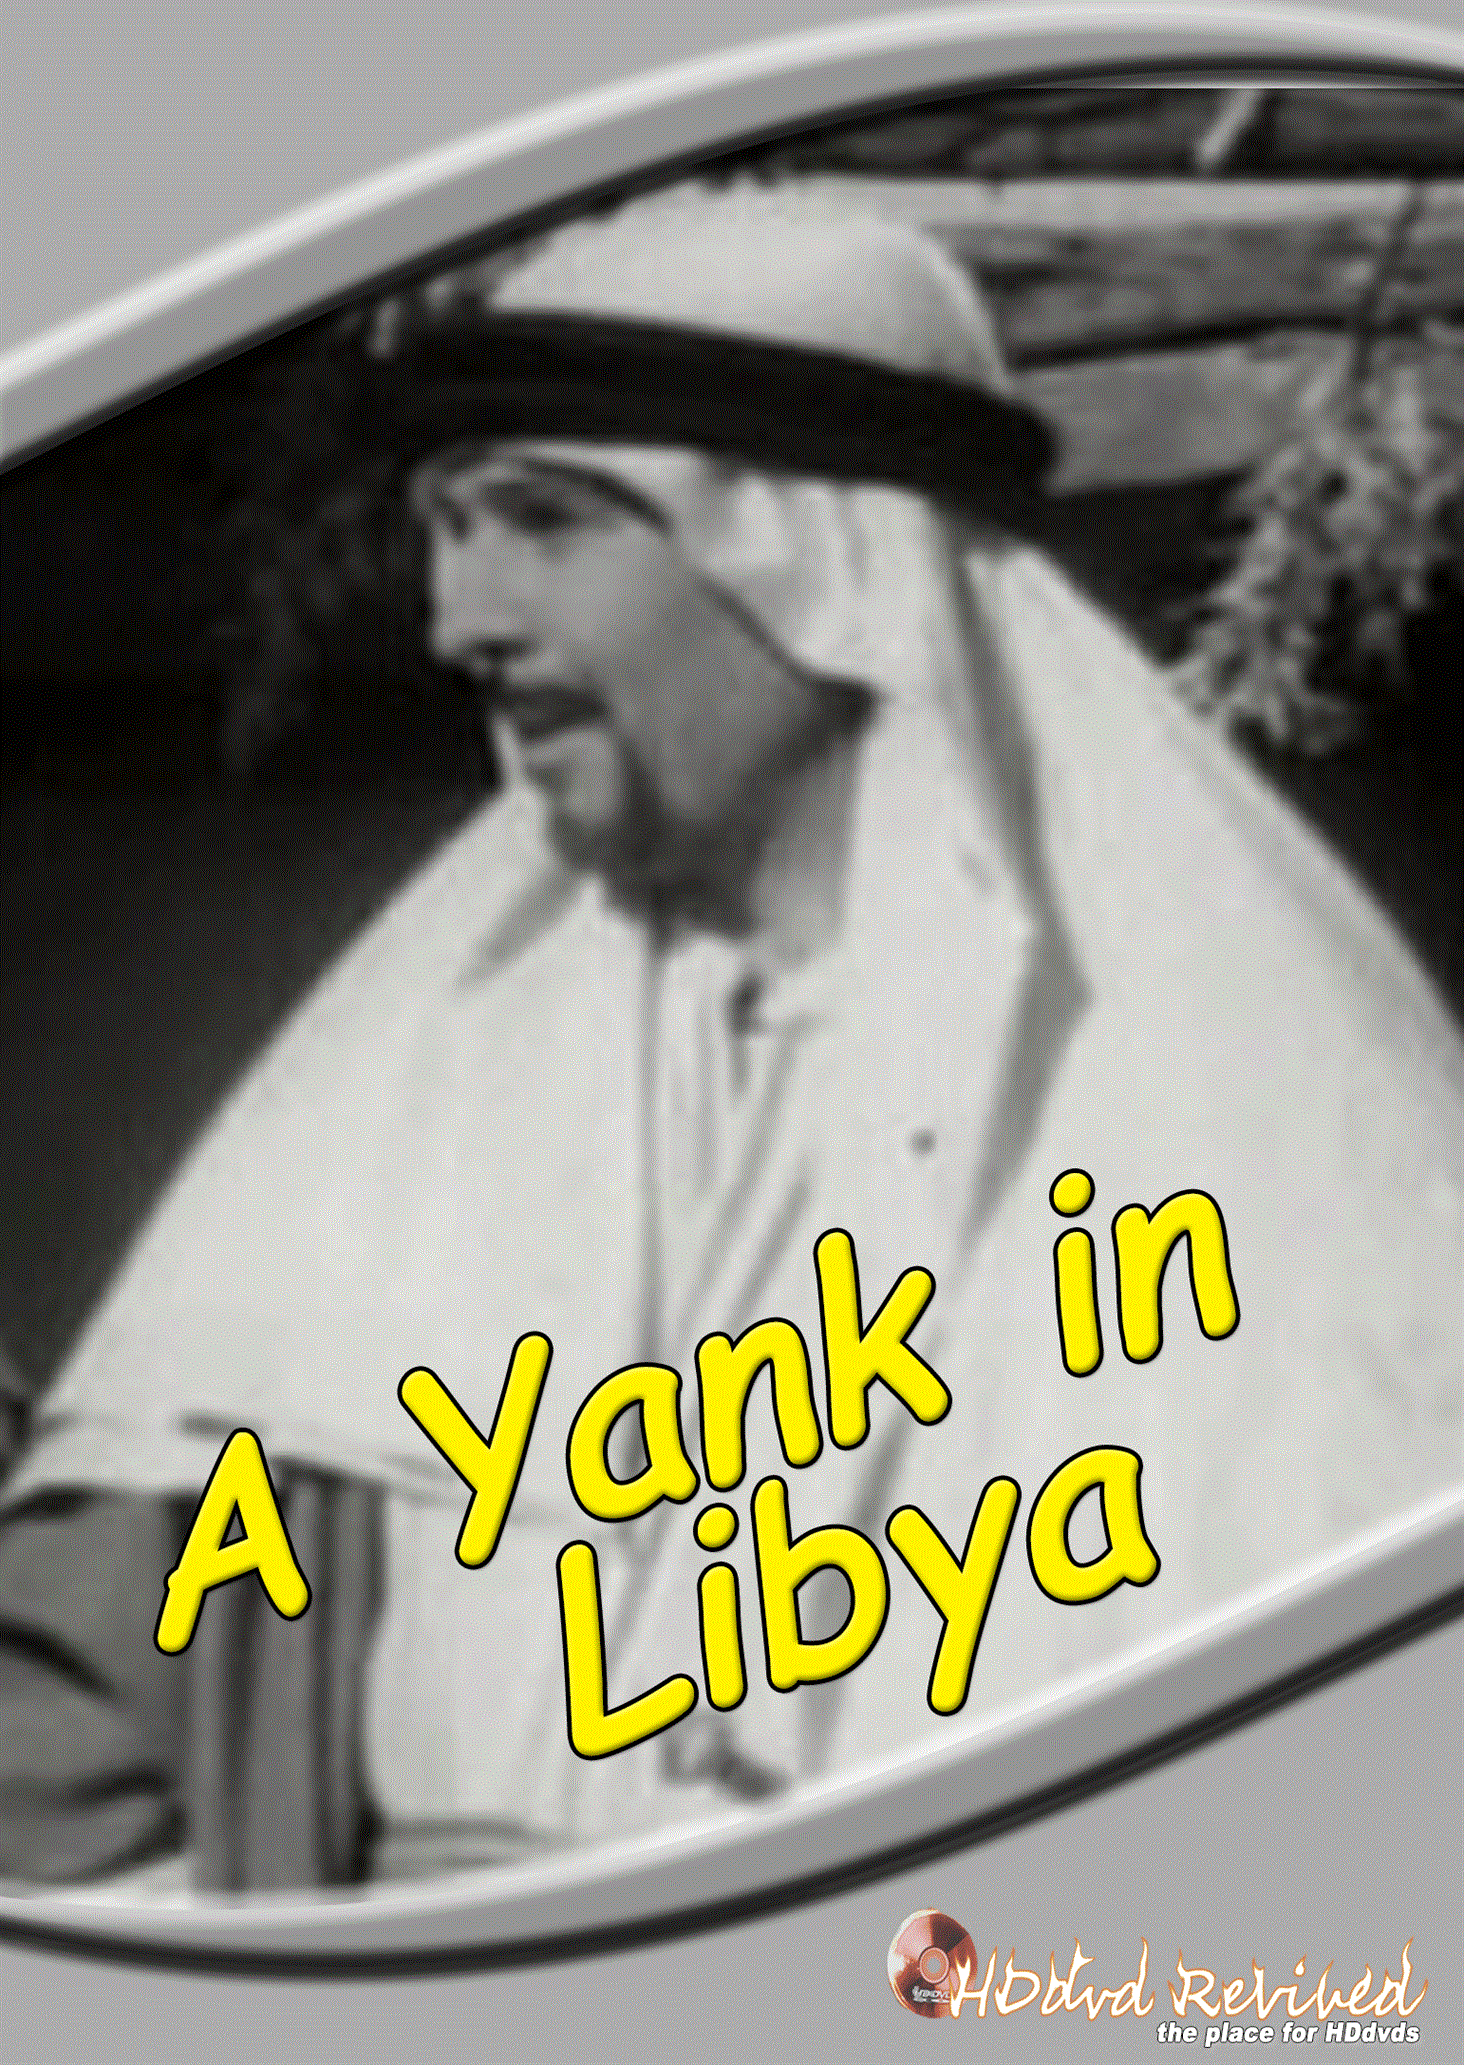 A Yank in Libya (1942) Standard DVD (HDDVD-Revived) UK Seller